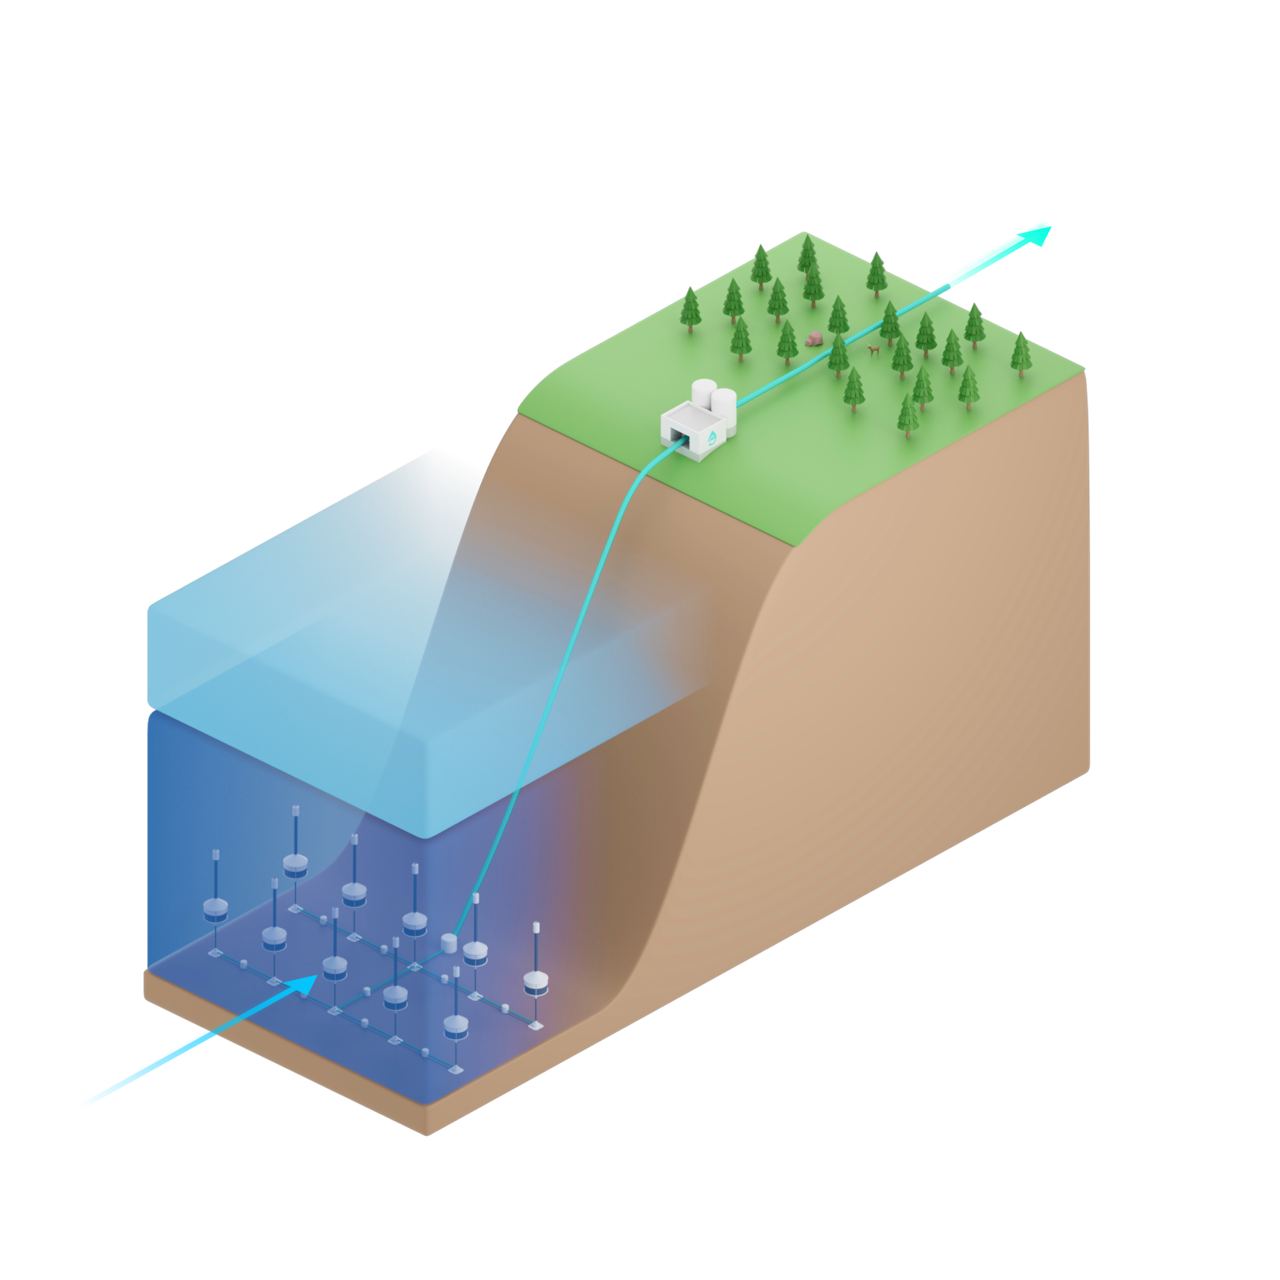 OceanWell rendering of their deep sea filtration system